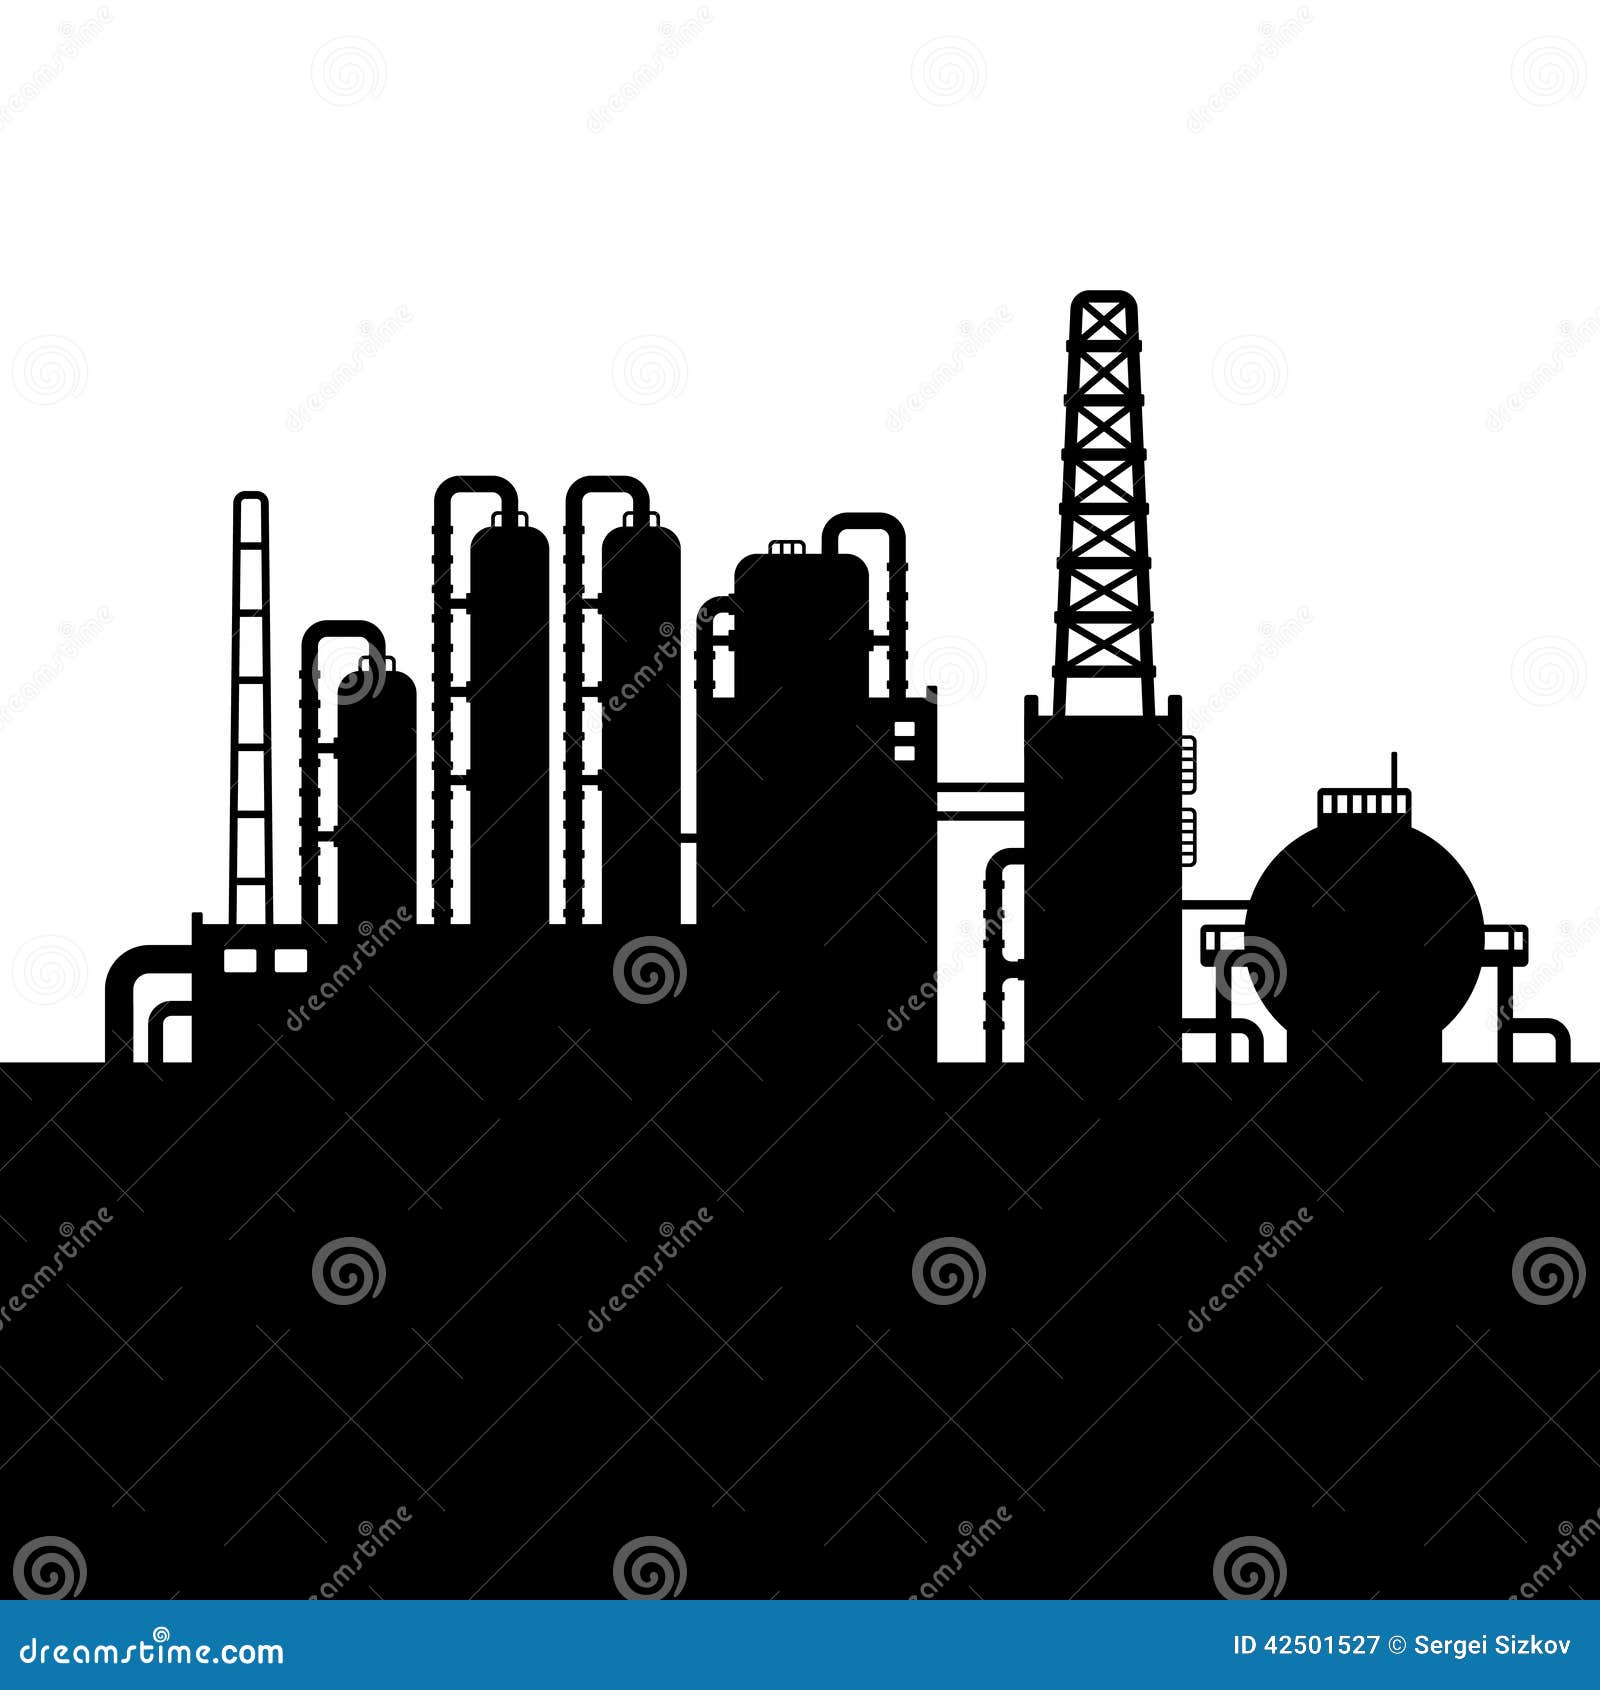 clipart oil refinery - photo #27